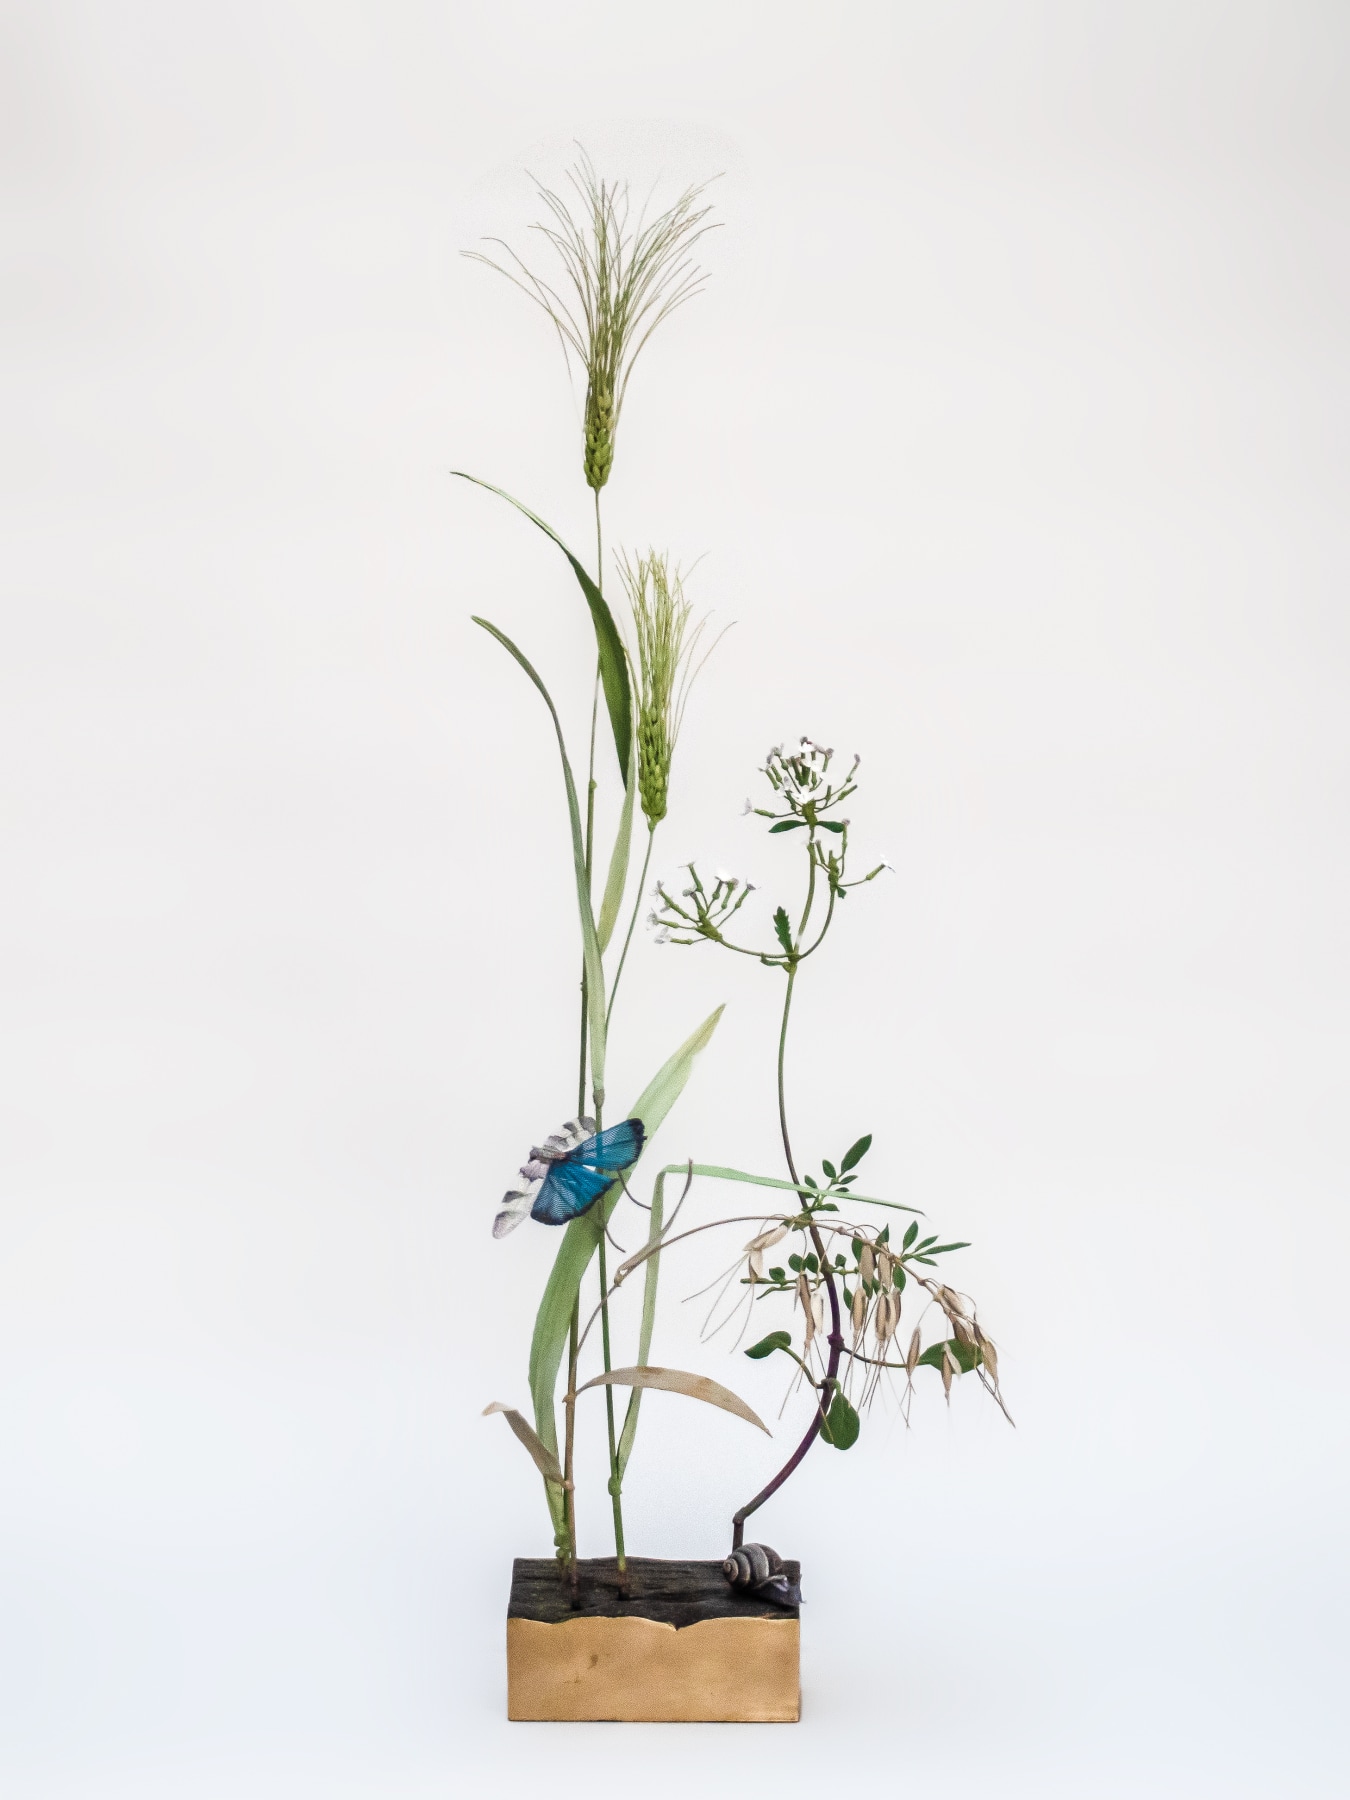 Carmen Almon, Wheat with Blue-winged Grasshopper, 2021